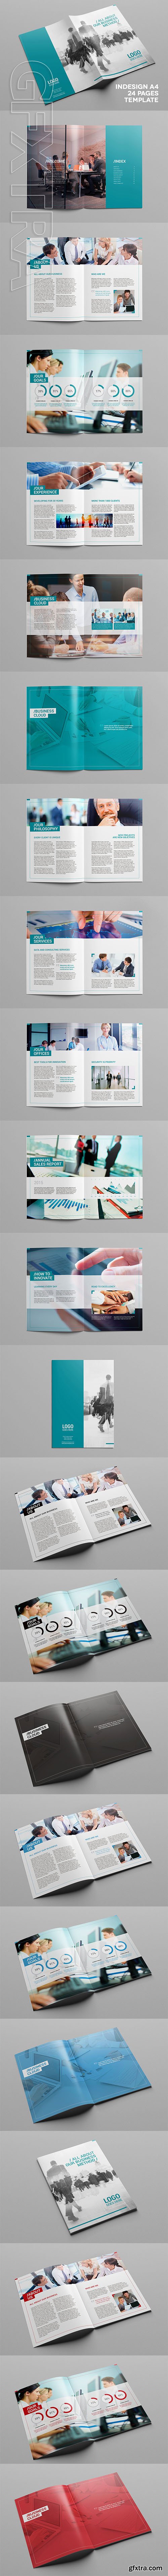 CreativeMarket - Multipurpose A4 Business Brochure 2334839